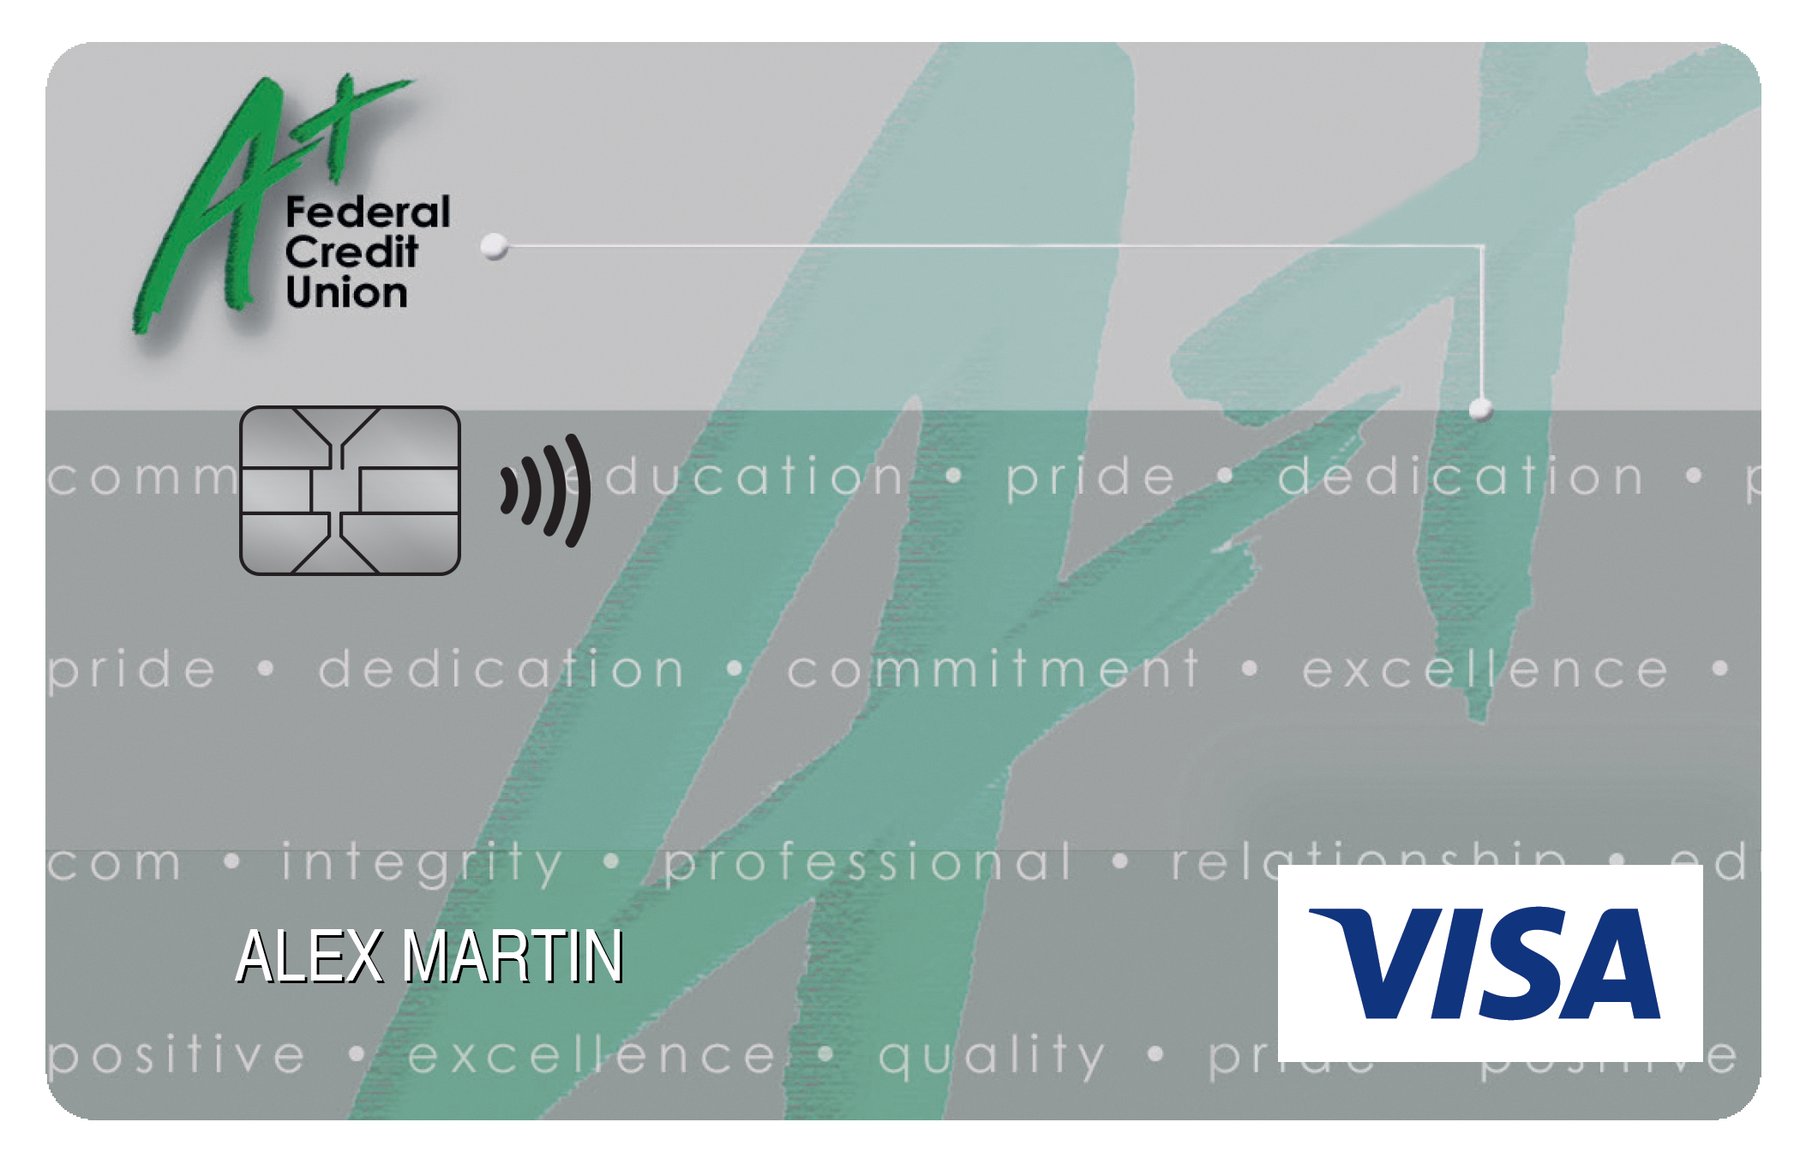 A+ Federal Credit Union Visa® Platinum Card